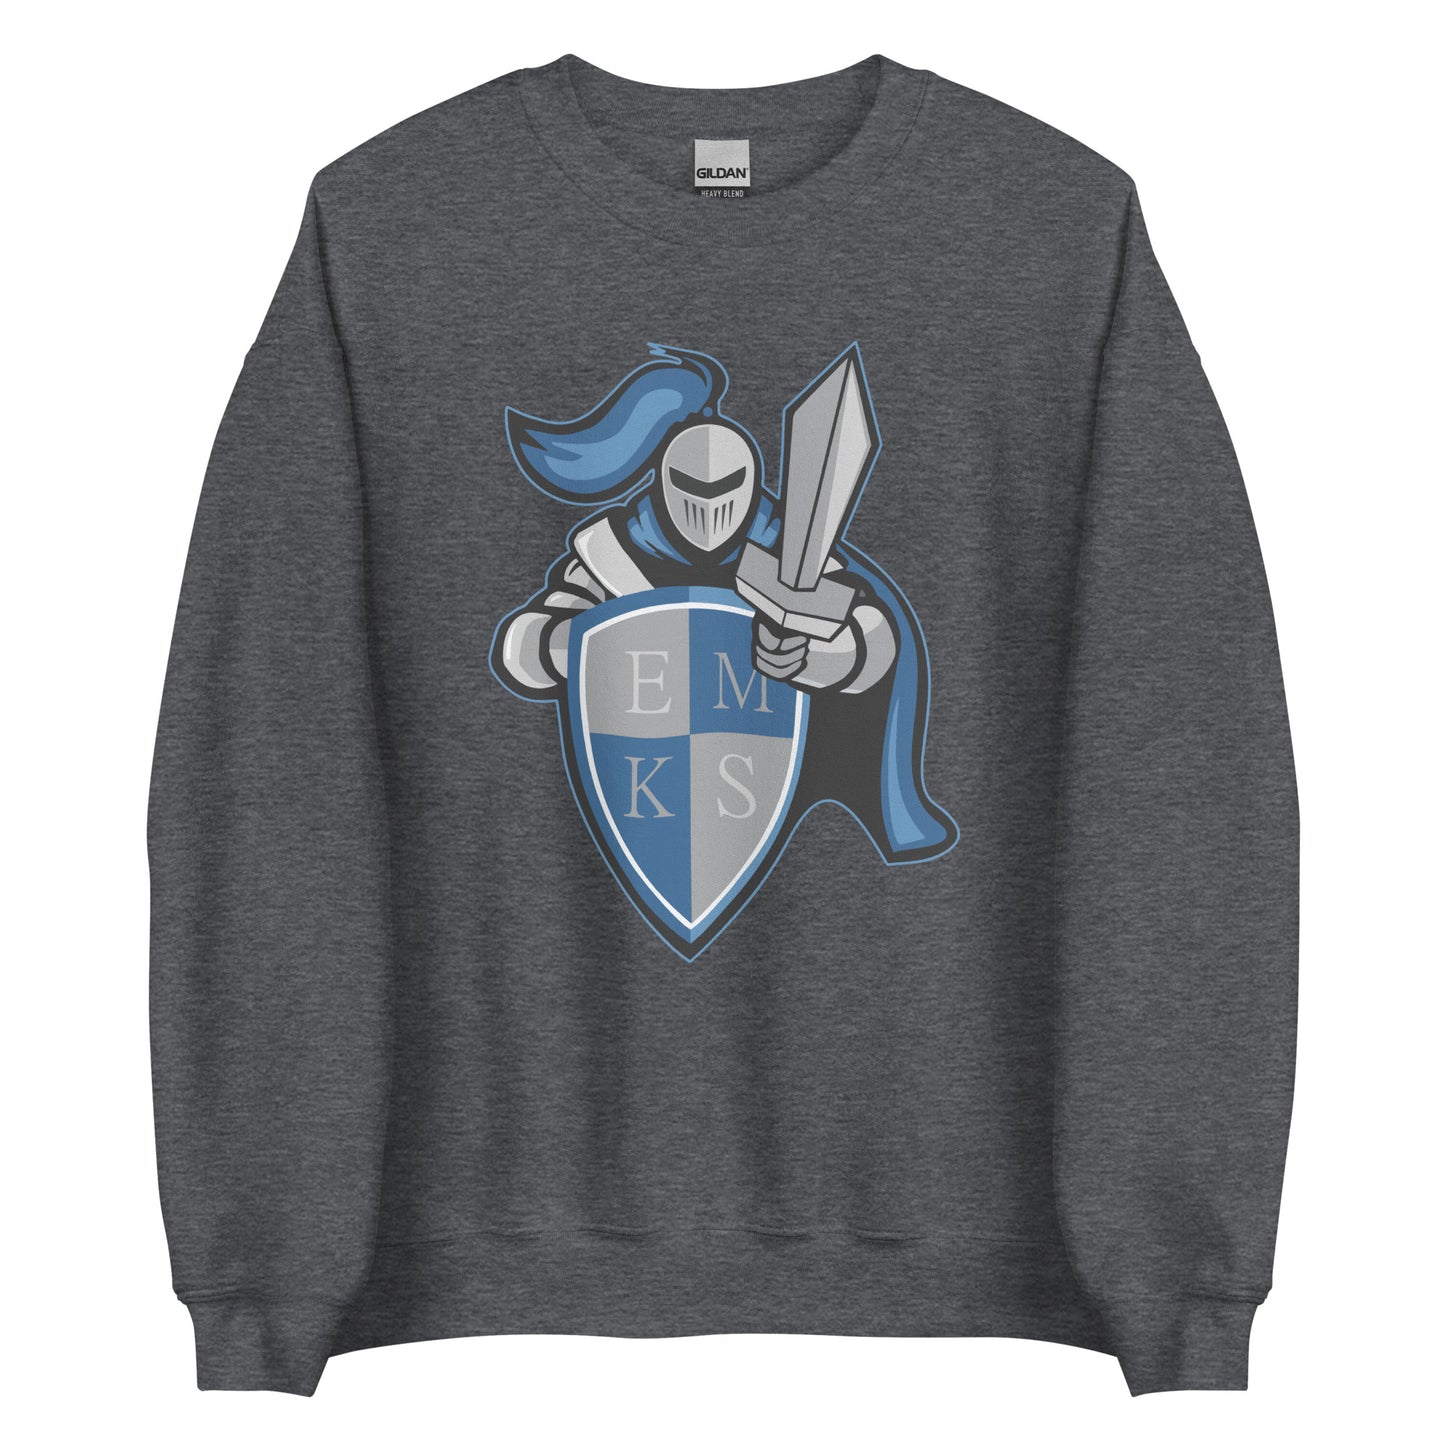 Kauffman Knight Adult Sweatshirt